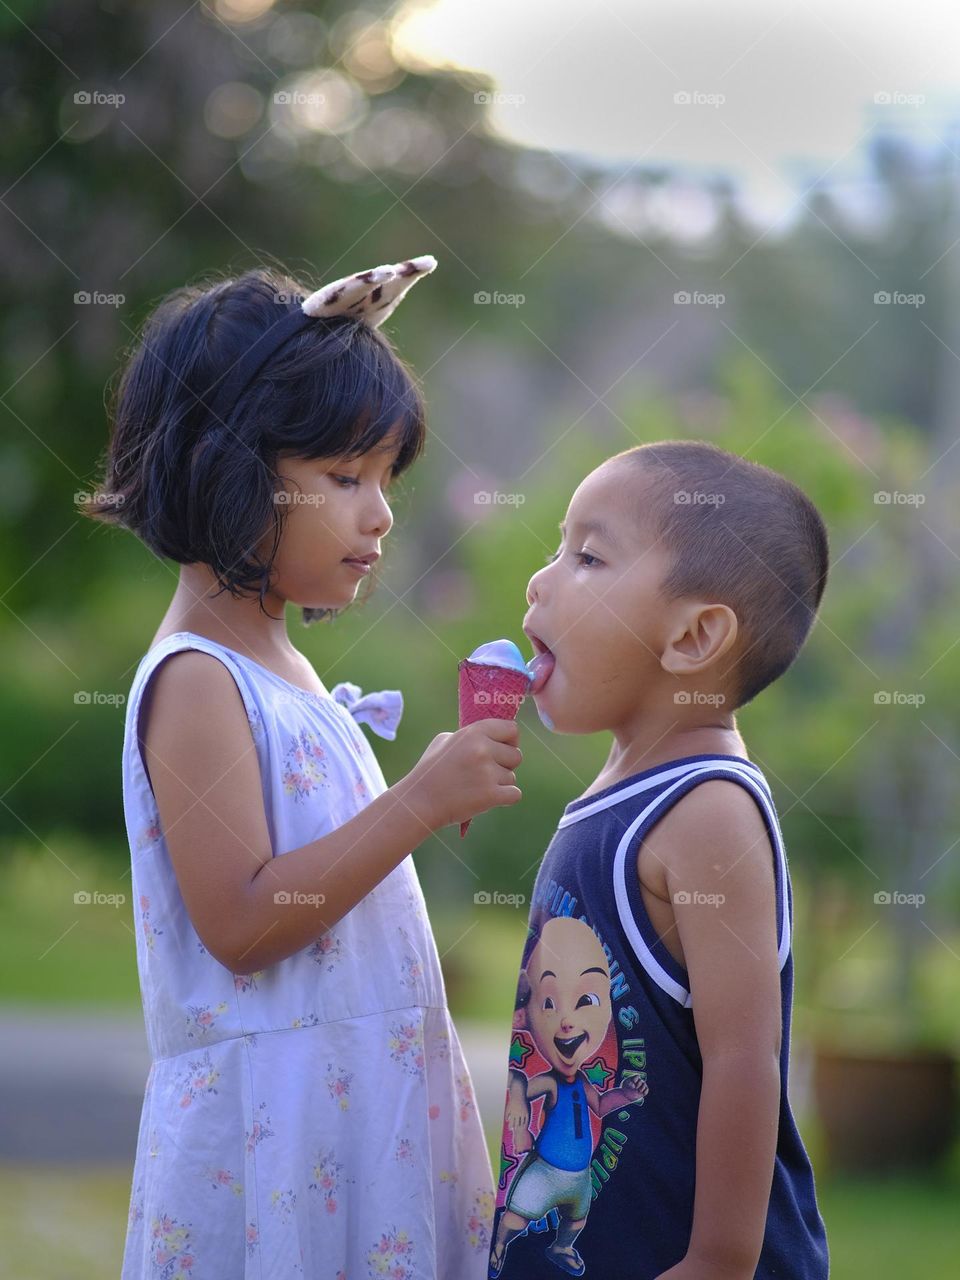 The children enjoy their ice cream during summer time.